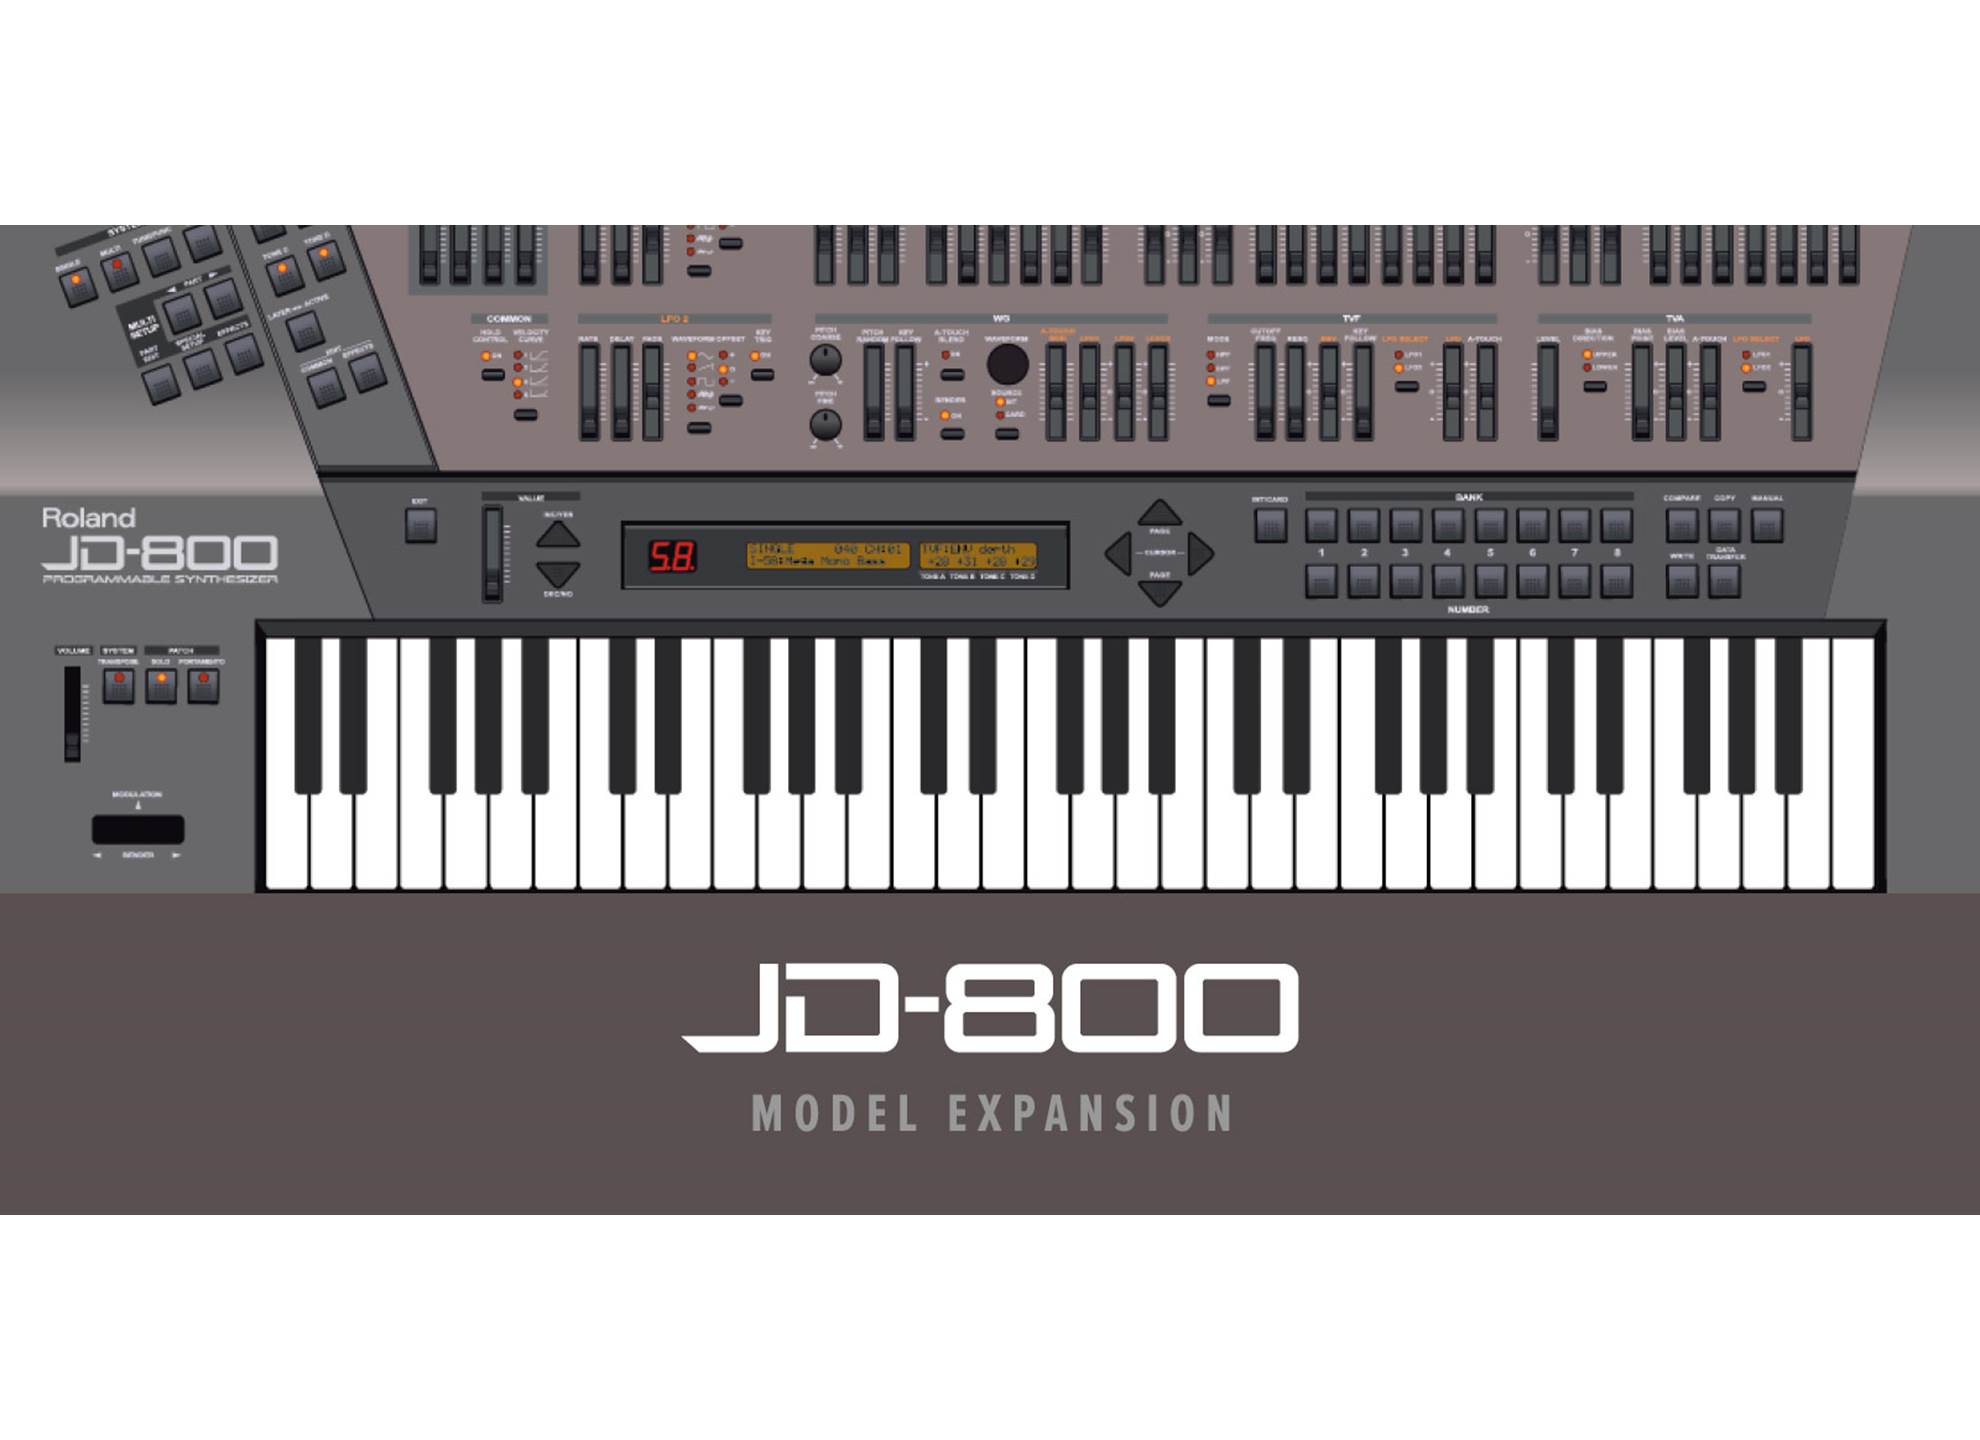 Cloud JD-800 Model Expansion